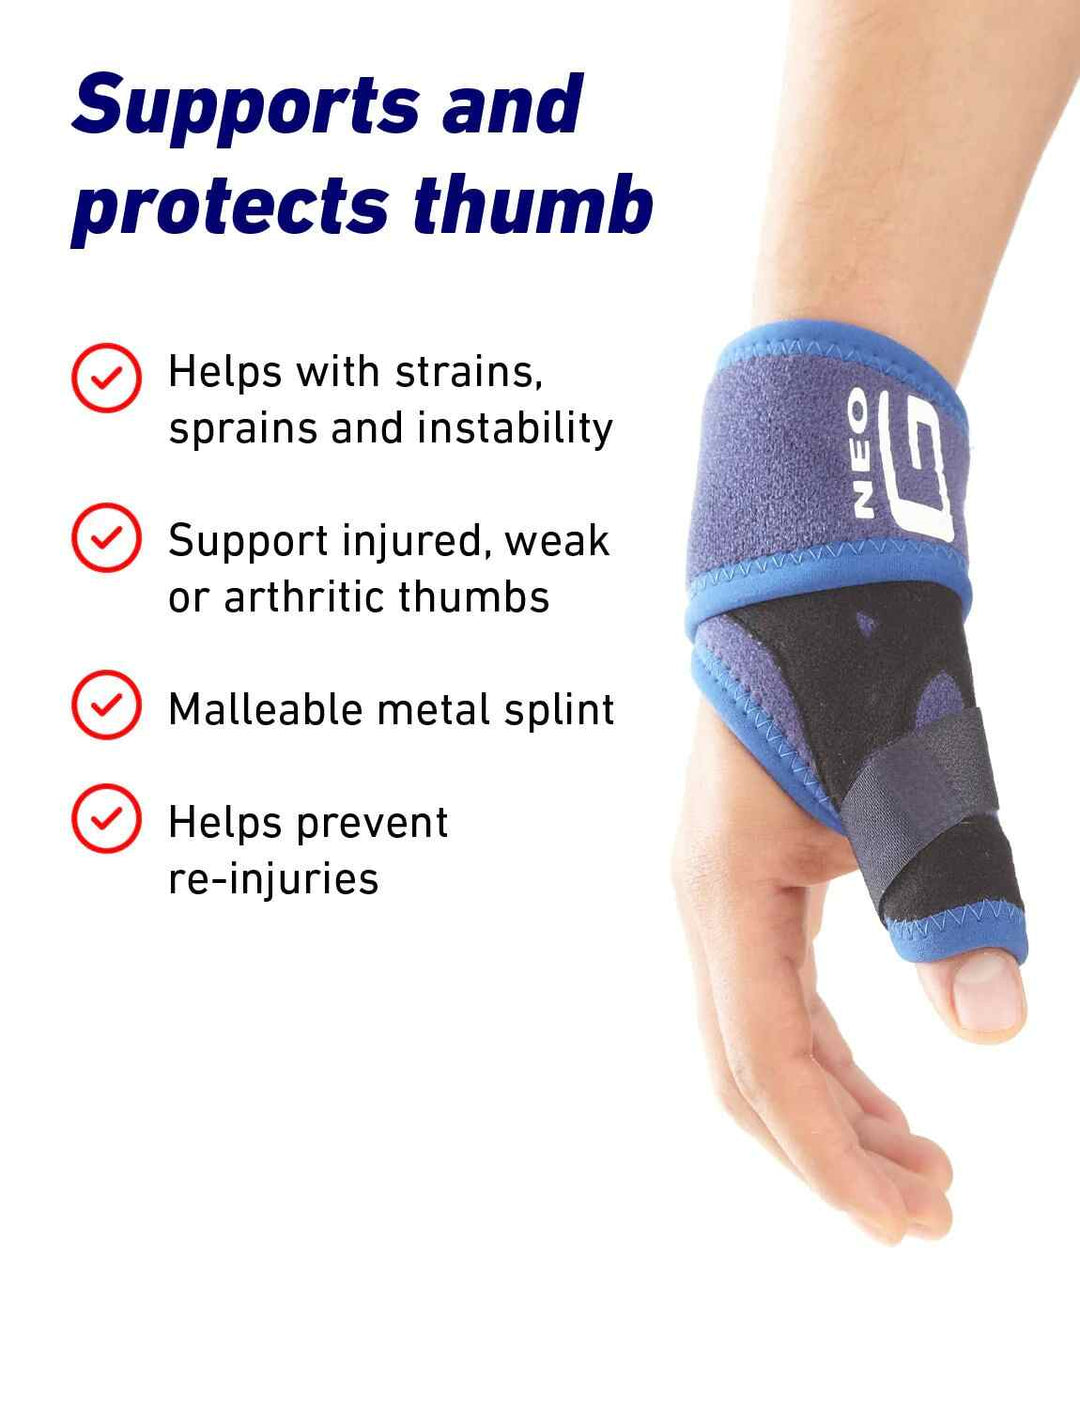 neo g thumb brace injuries